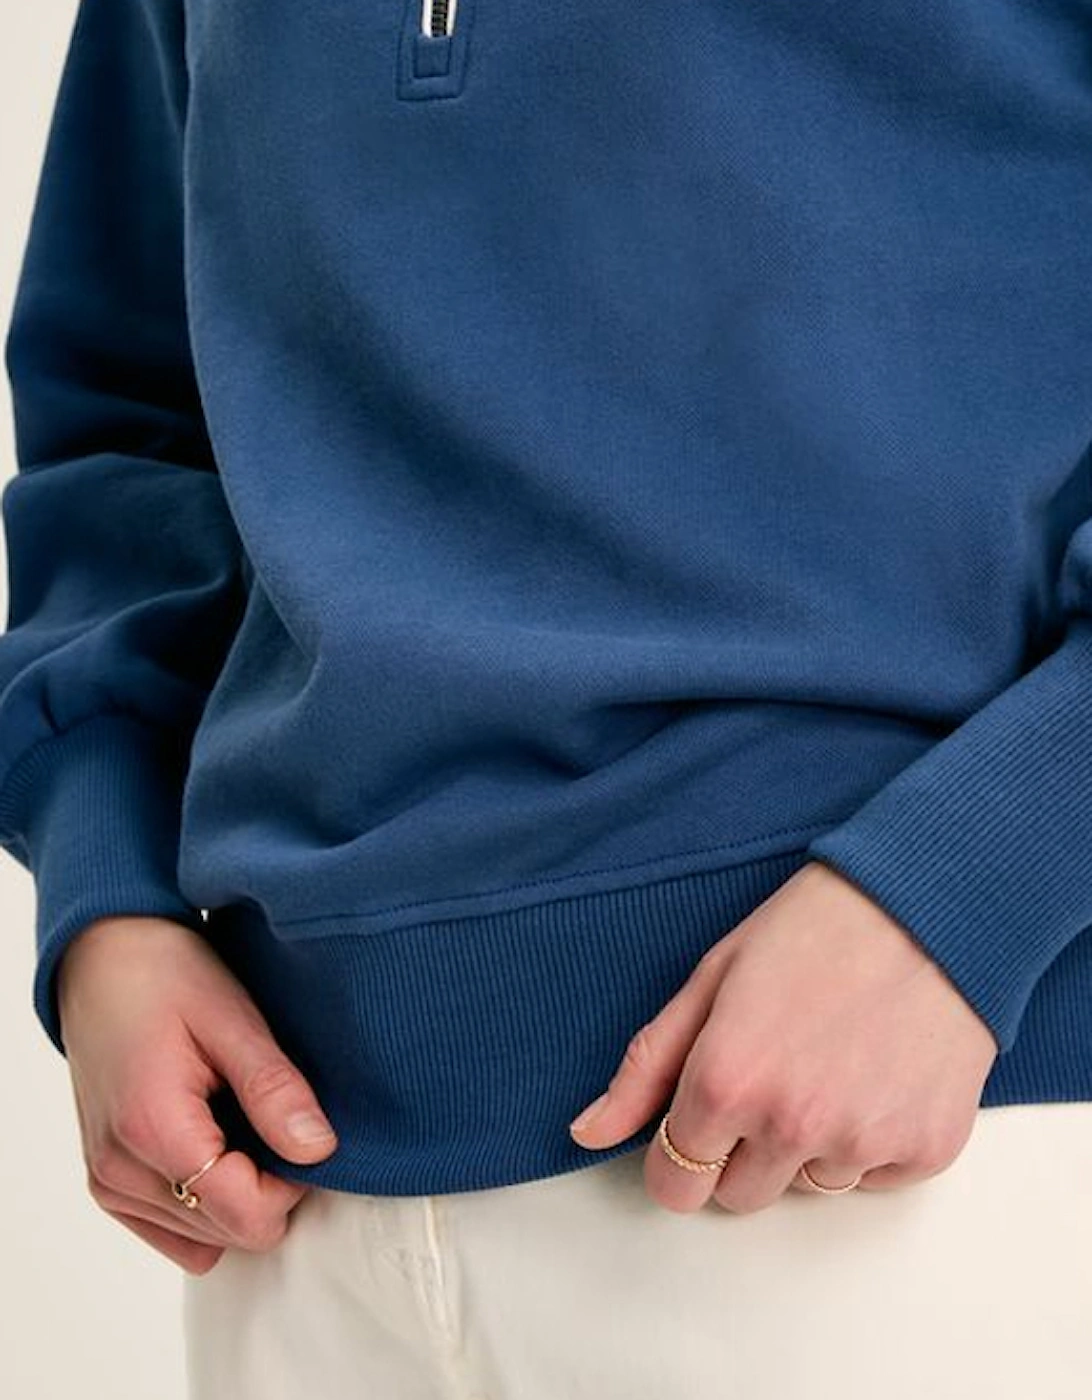 Women's Racquet Cotton Quarter Zip Sweatshirt Blue